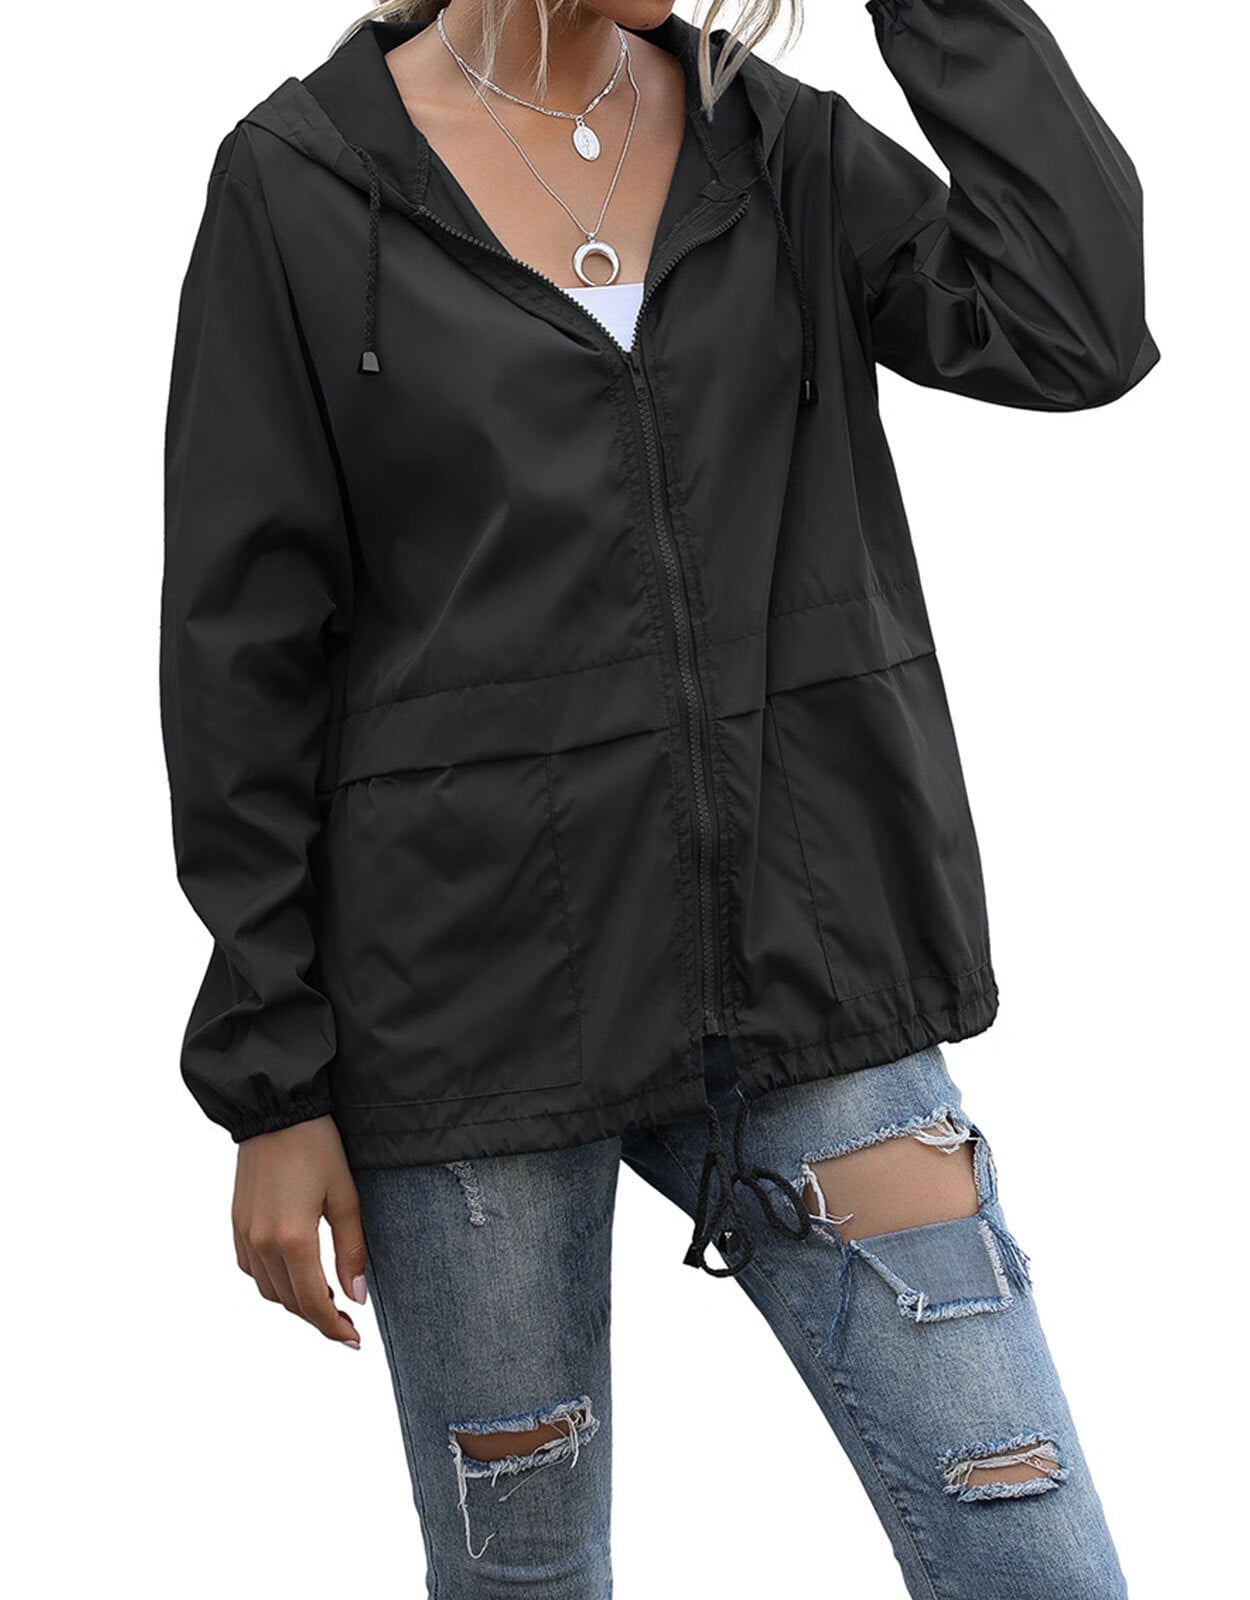 Alsol Lamesa Raincoats for Women Waterproof Lightweight Rain Jackets ...